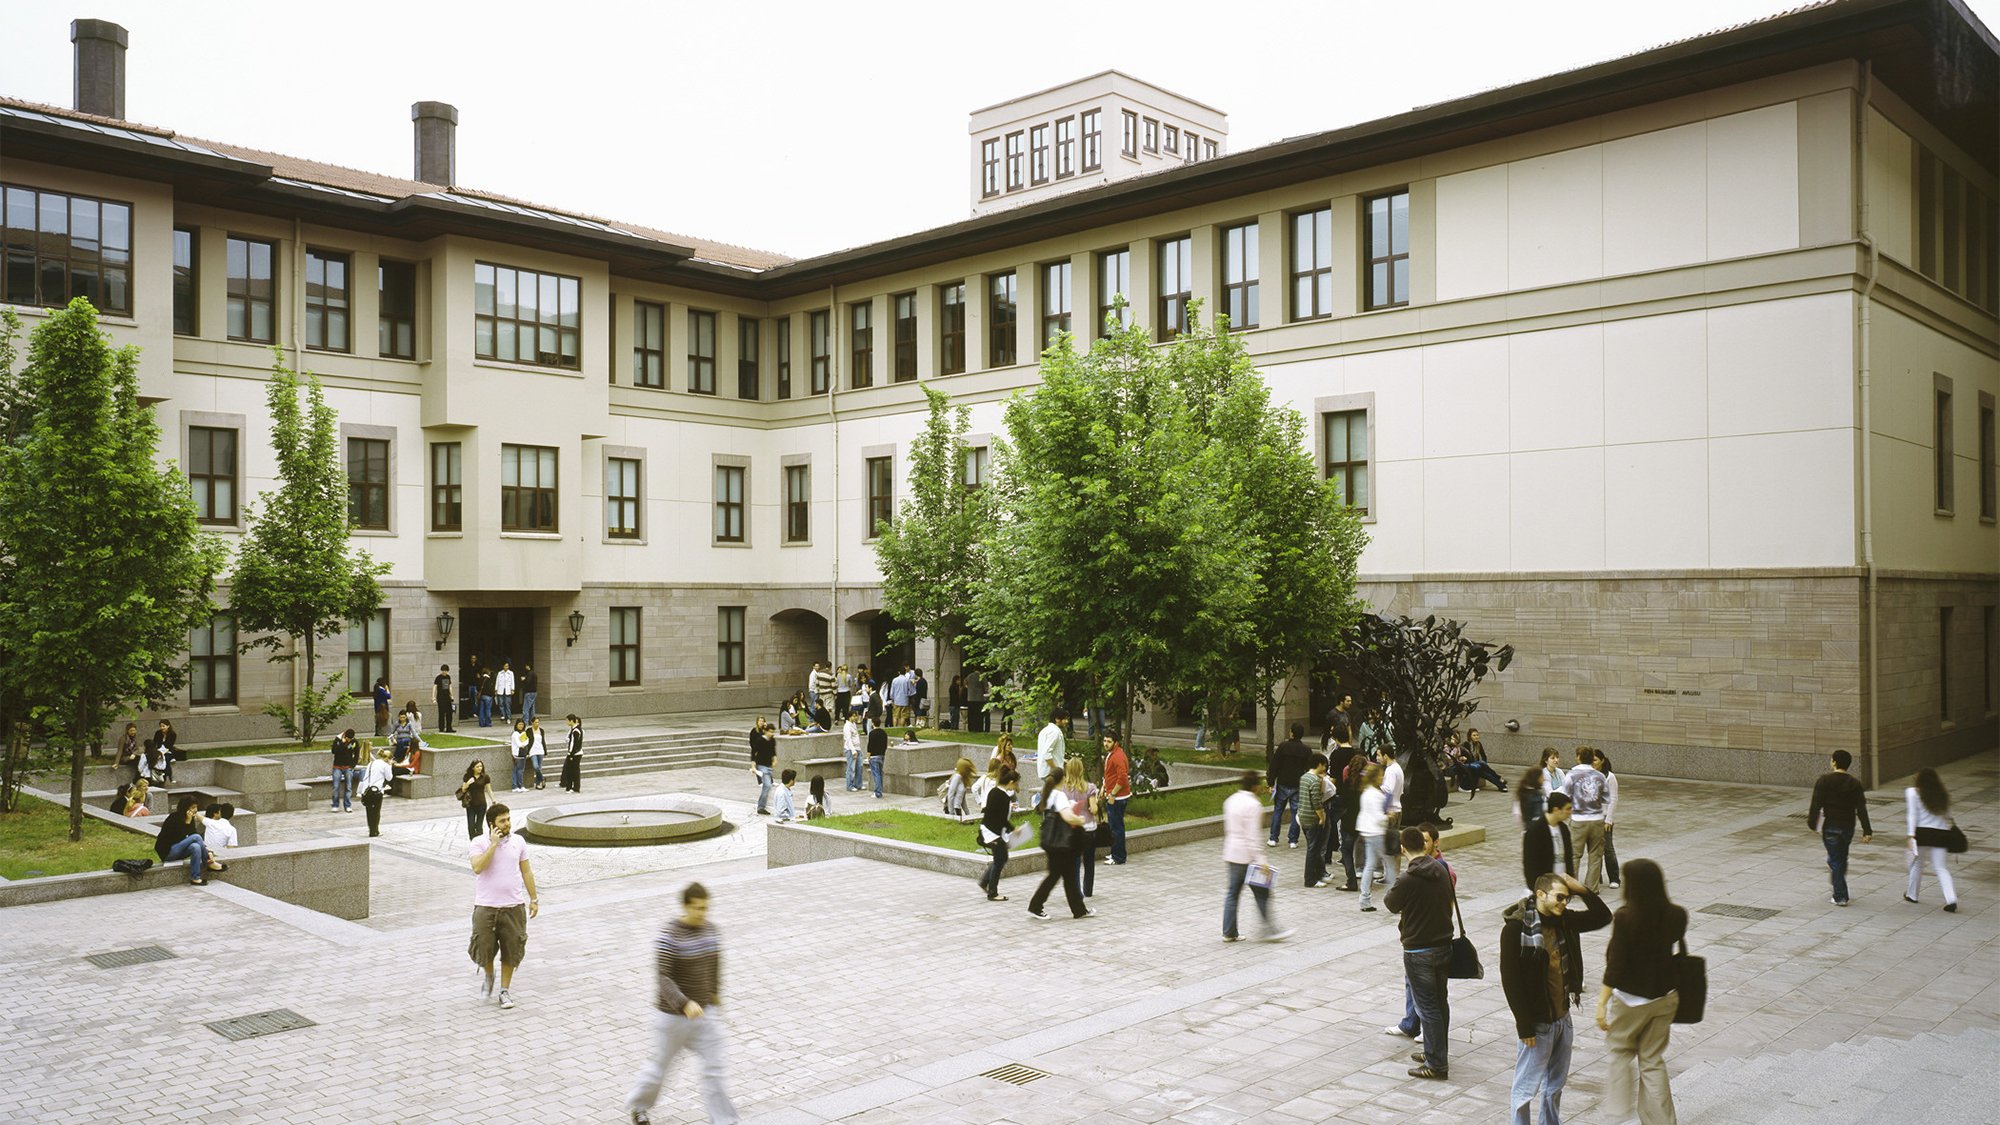 Koc university